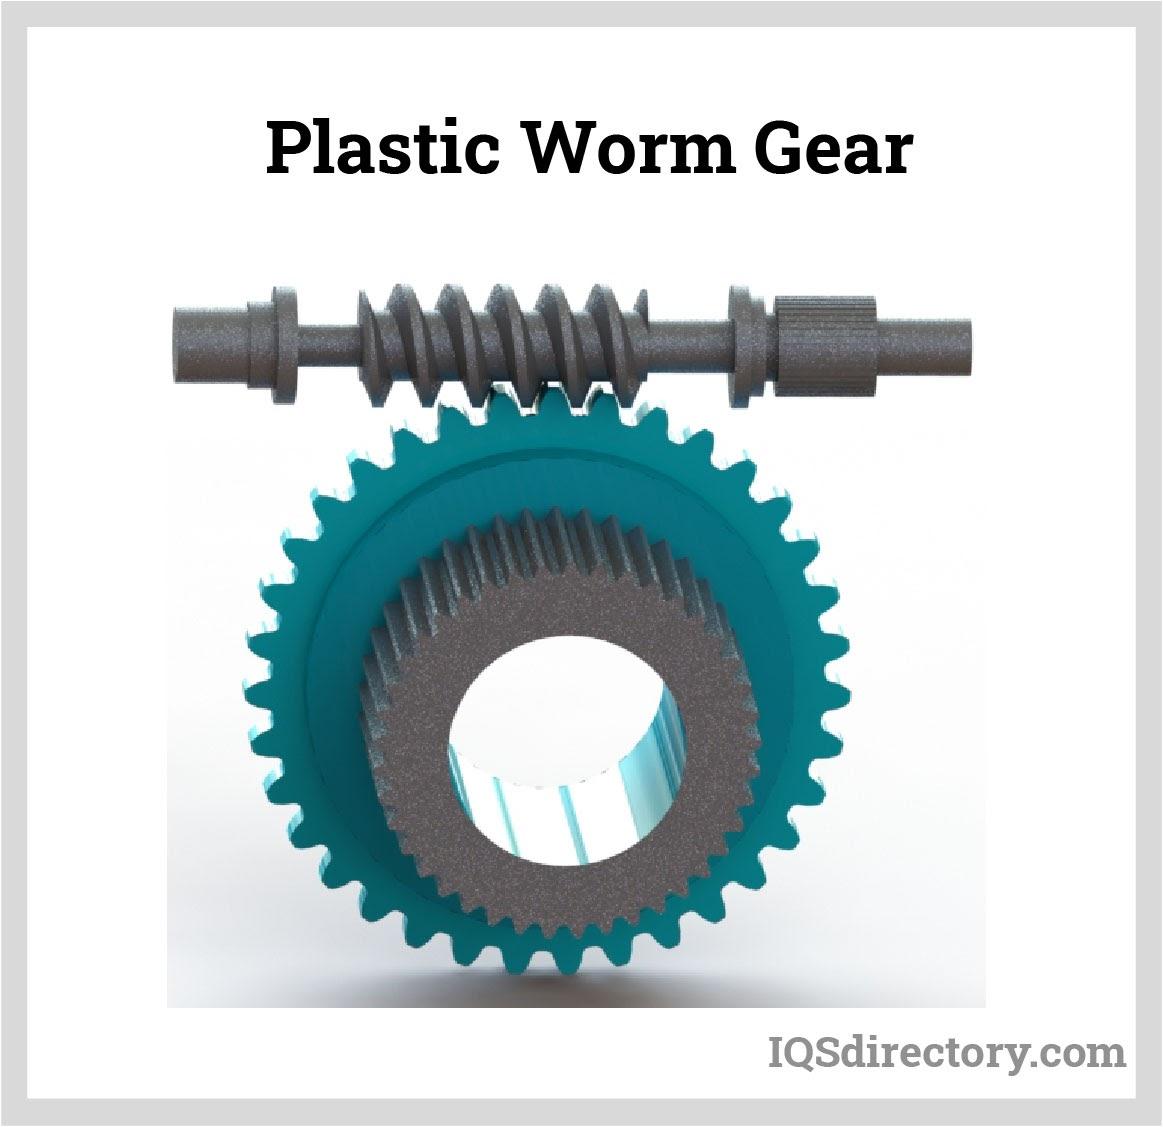 Plastic Worm Gears